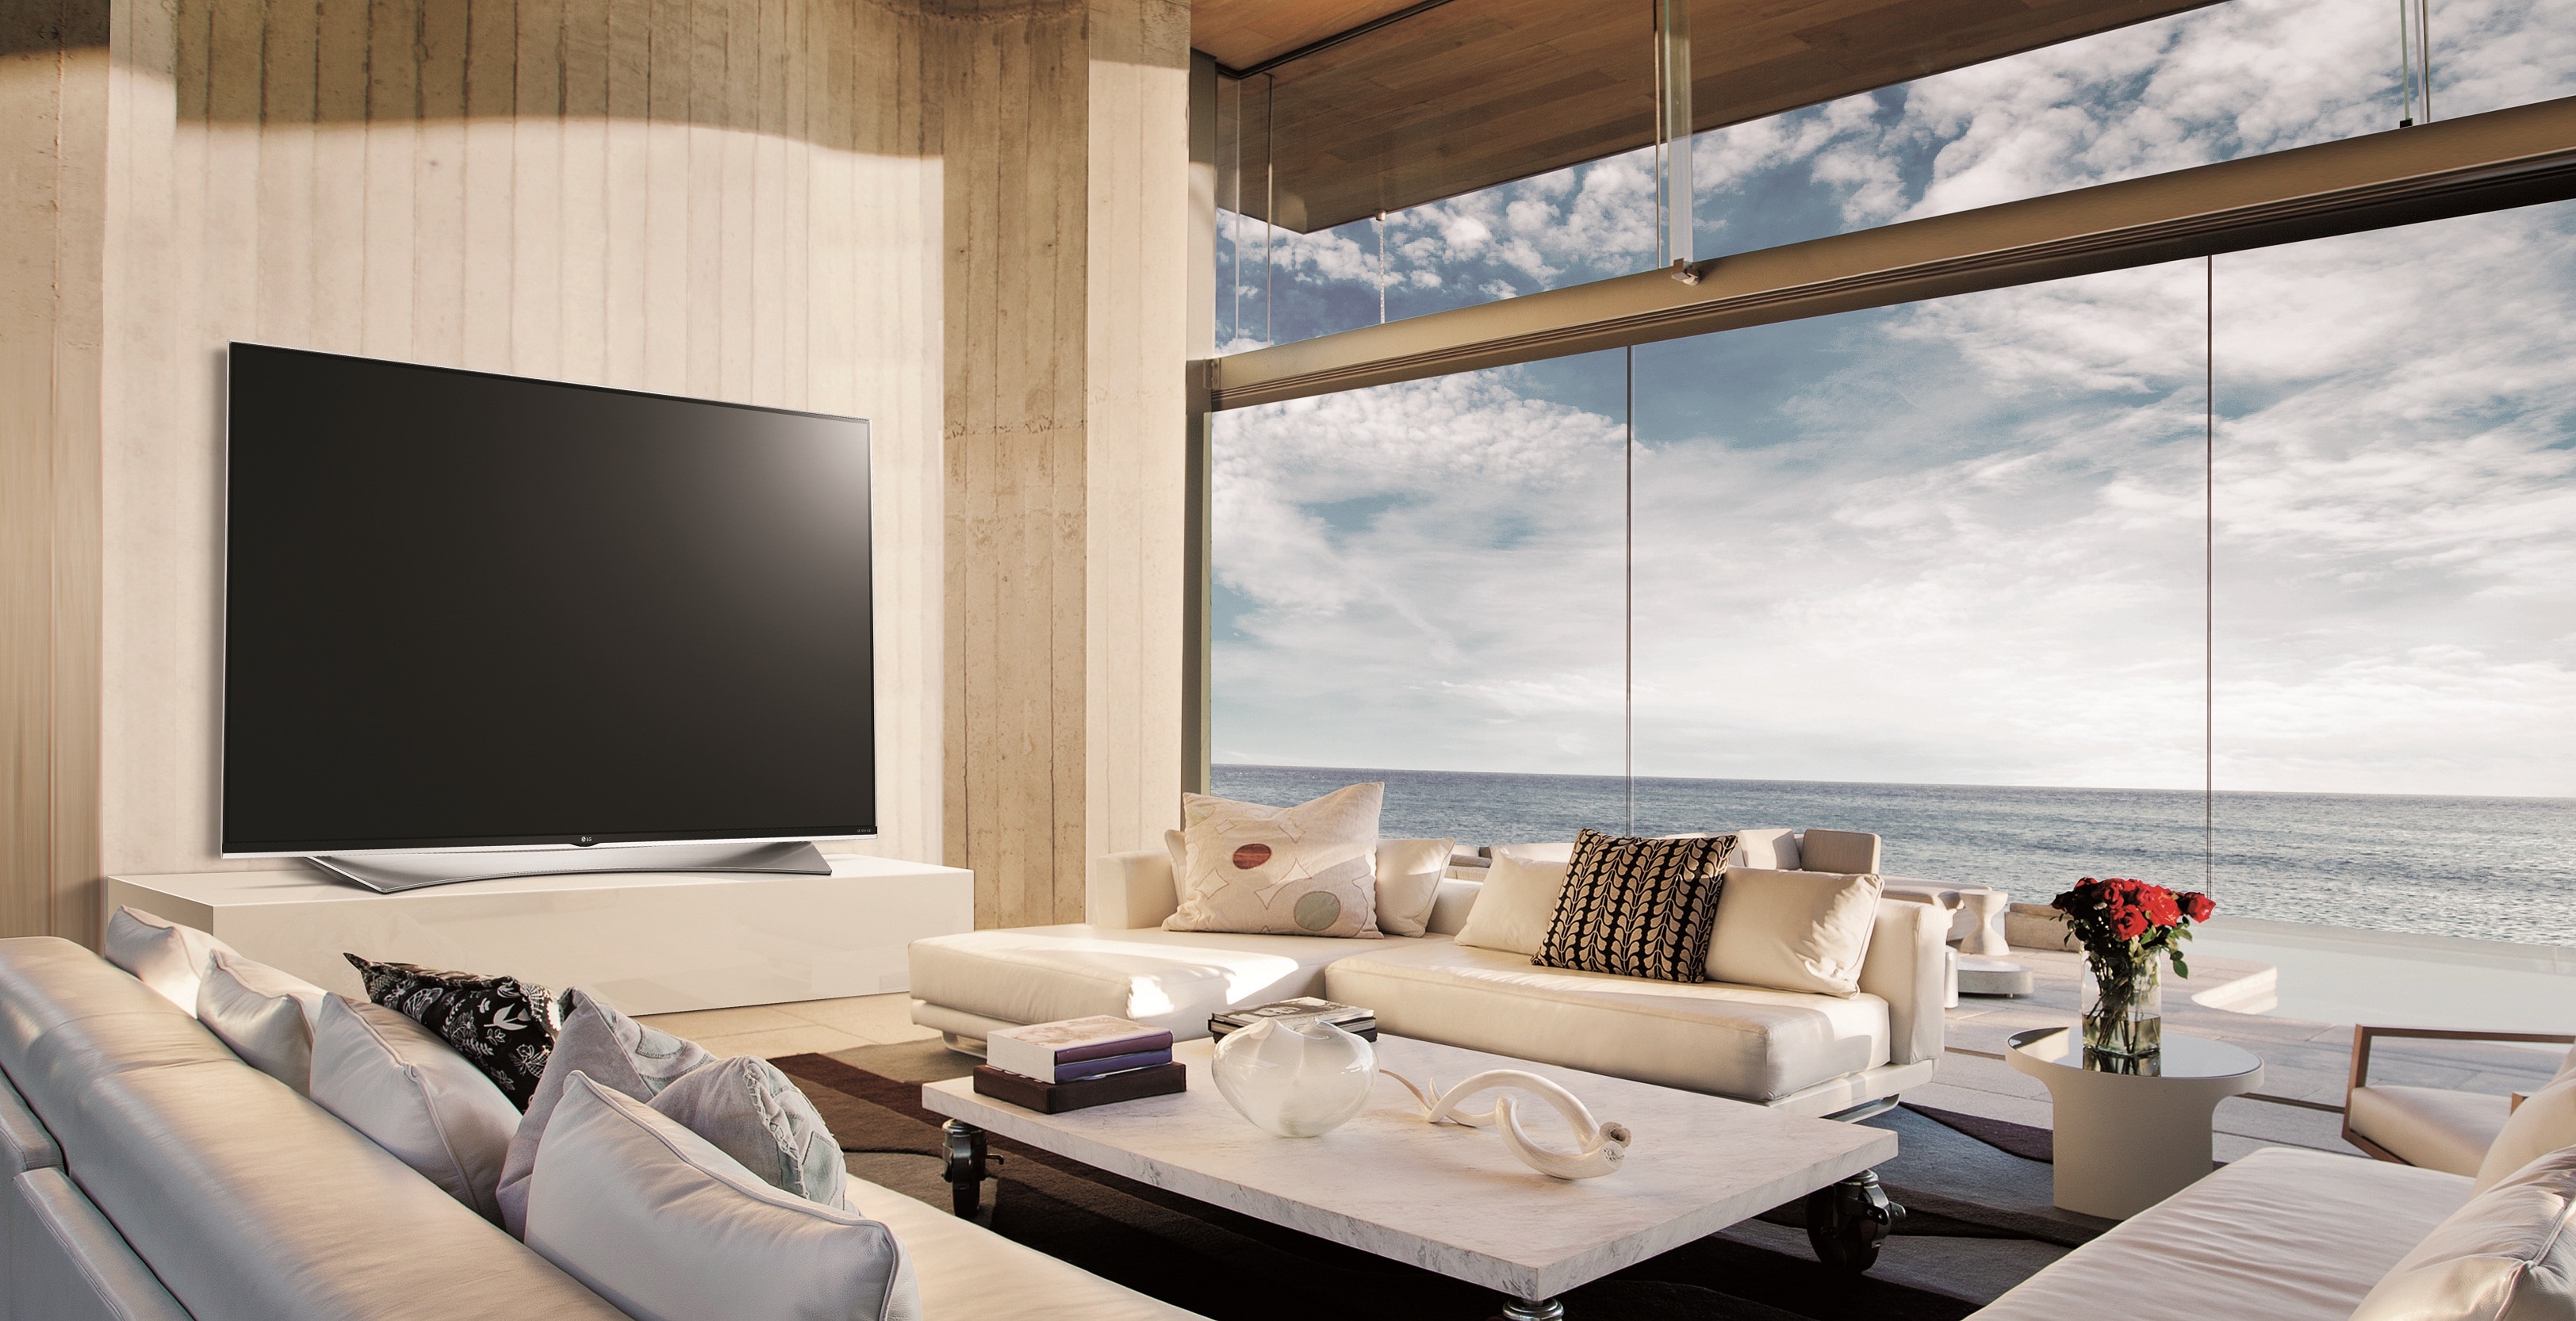 Сколько служит телевизор. Телевизор самсунг 2015. Изогнутый телевизор на стене. Диван и телевизор. Большие телевизоры плоские.